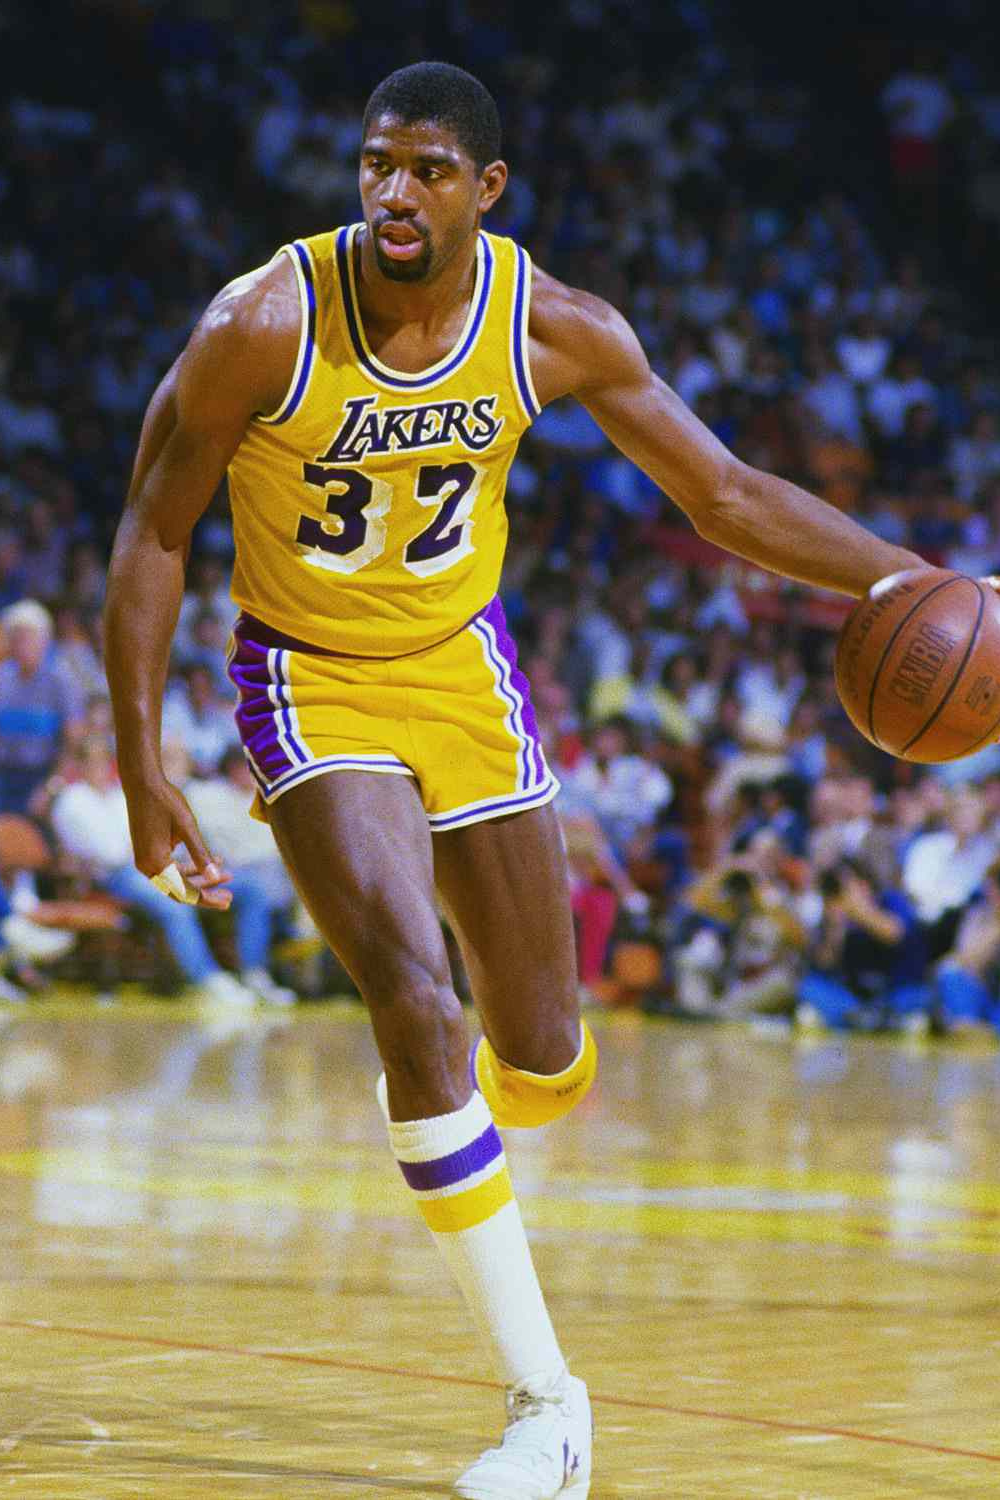 Magic Johnson, A Former Professional Basketball Player